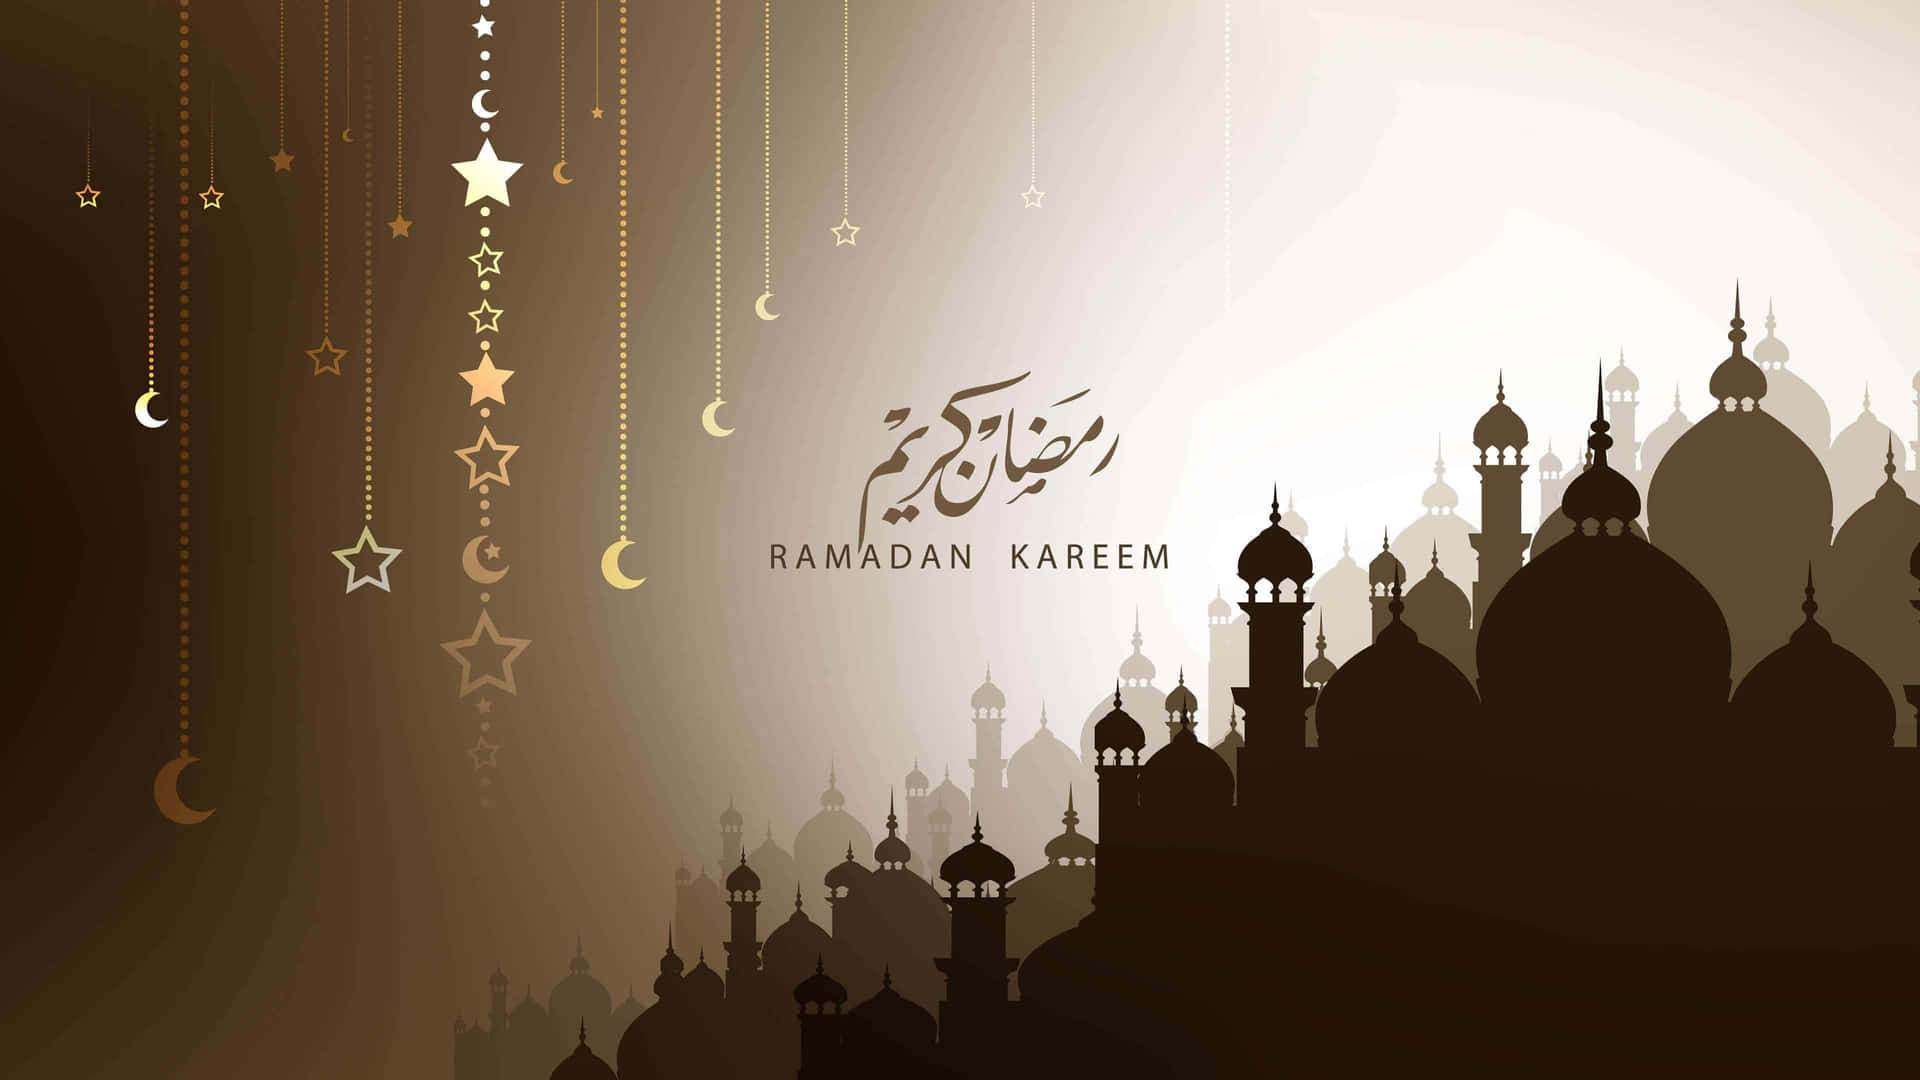 Welcome Ramadan with a Joyful Heart